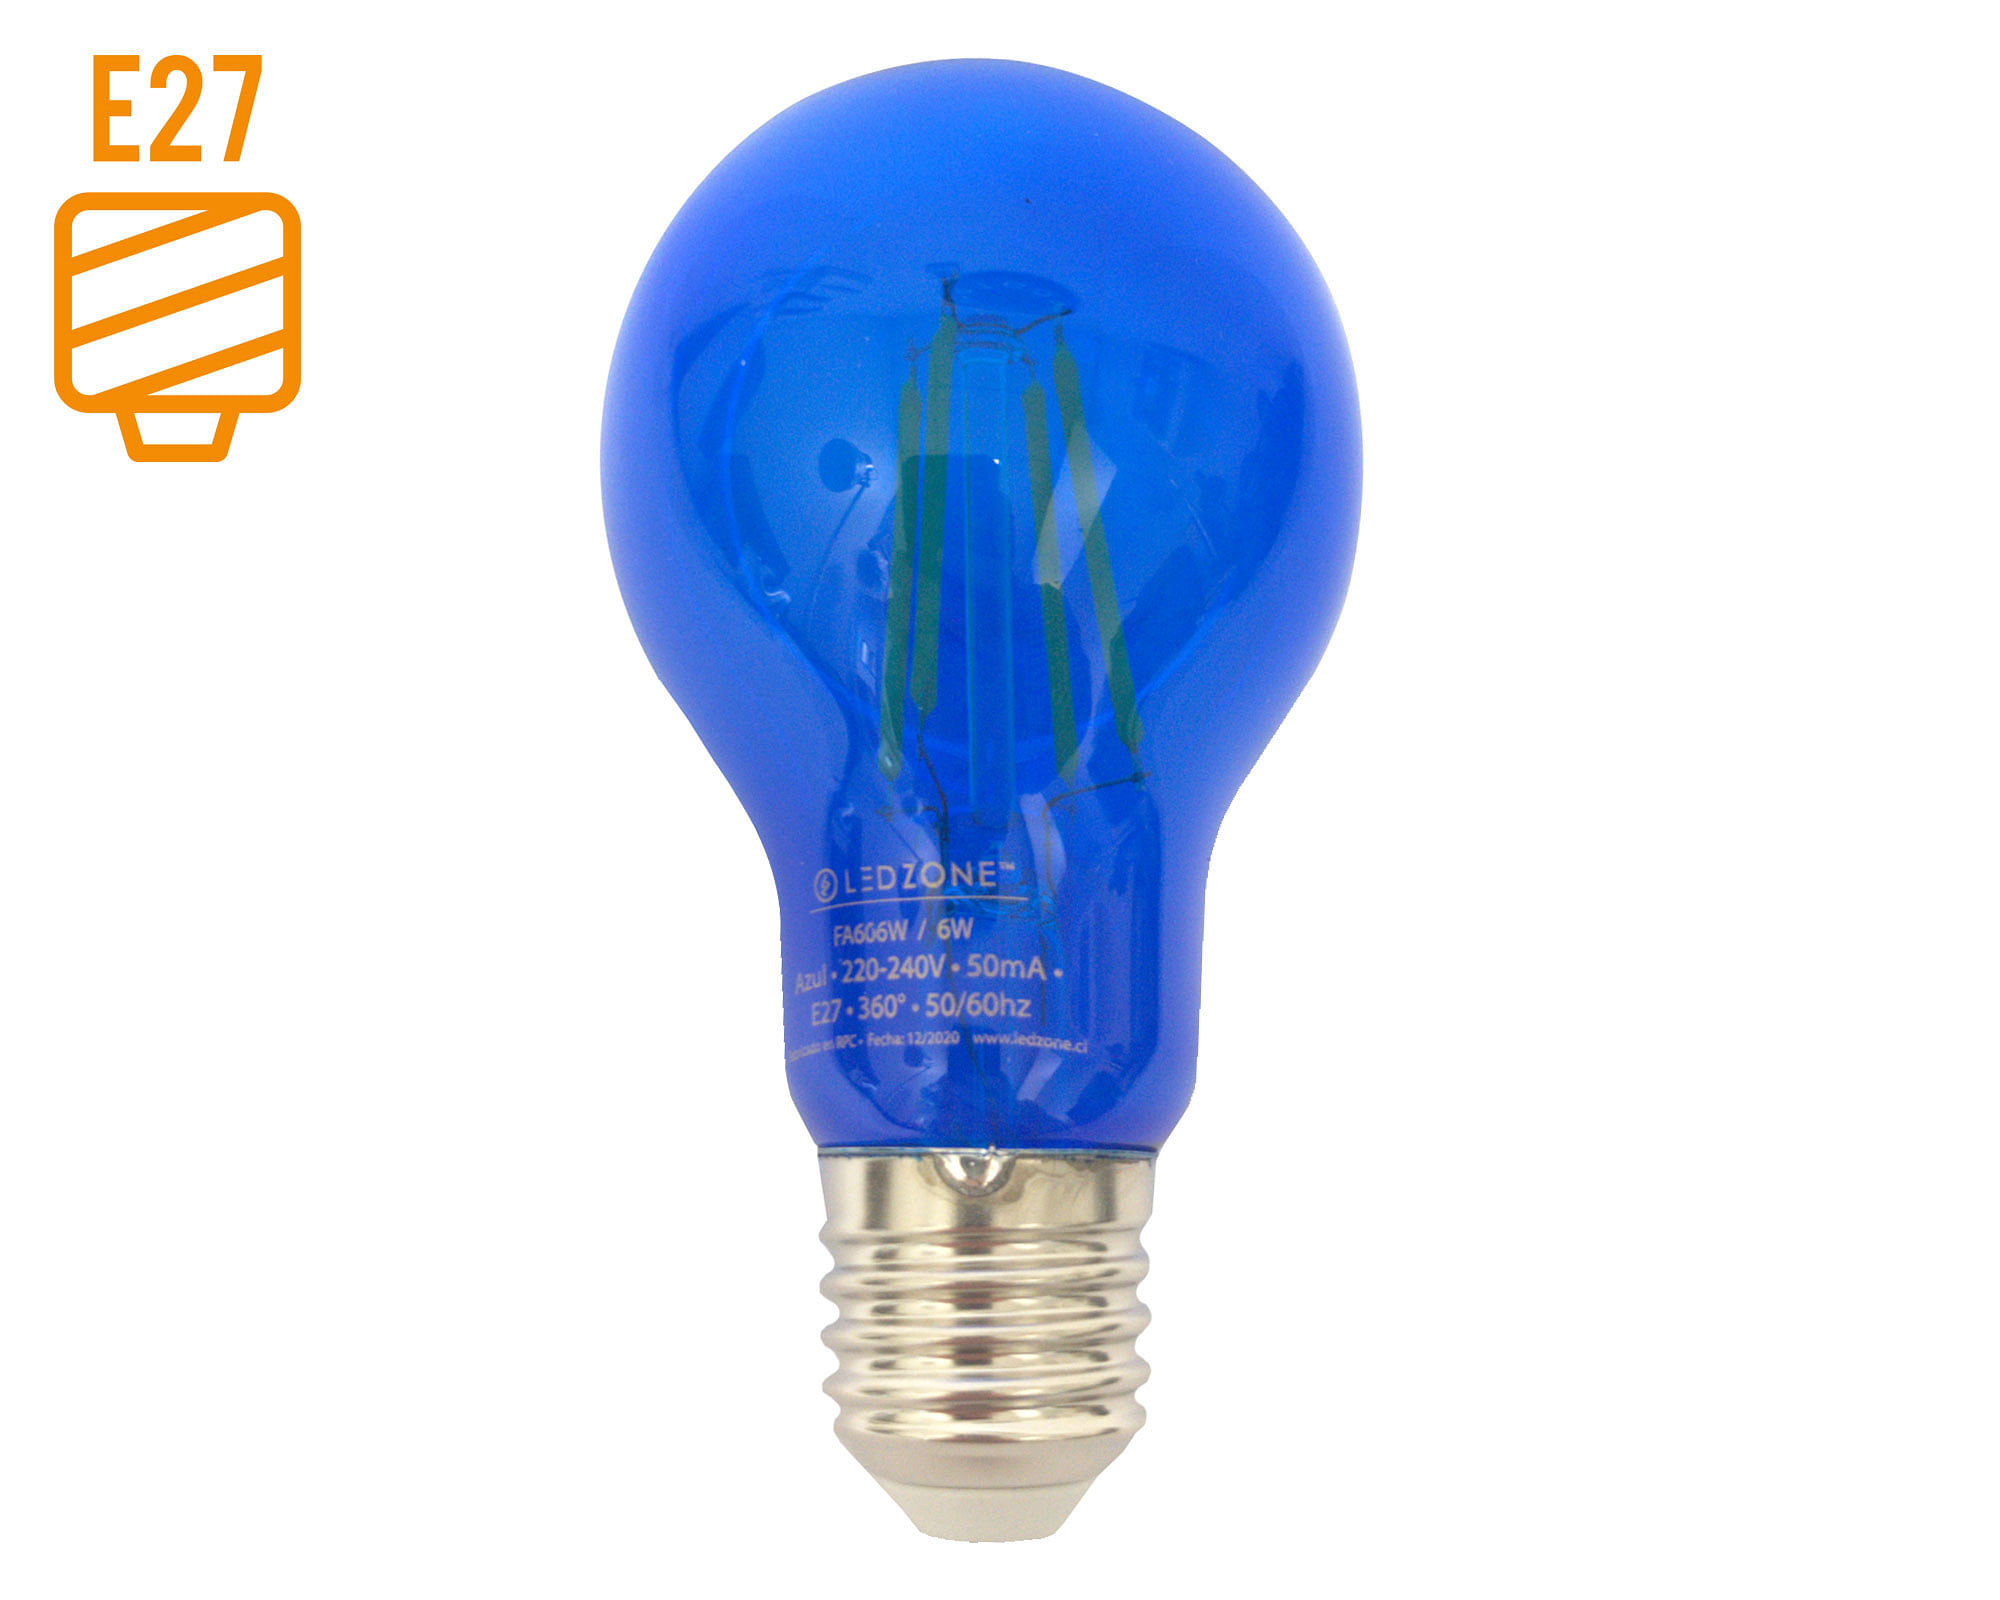 Ampolleta LED 6W E27 luz cálida azul Ledzone.